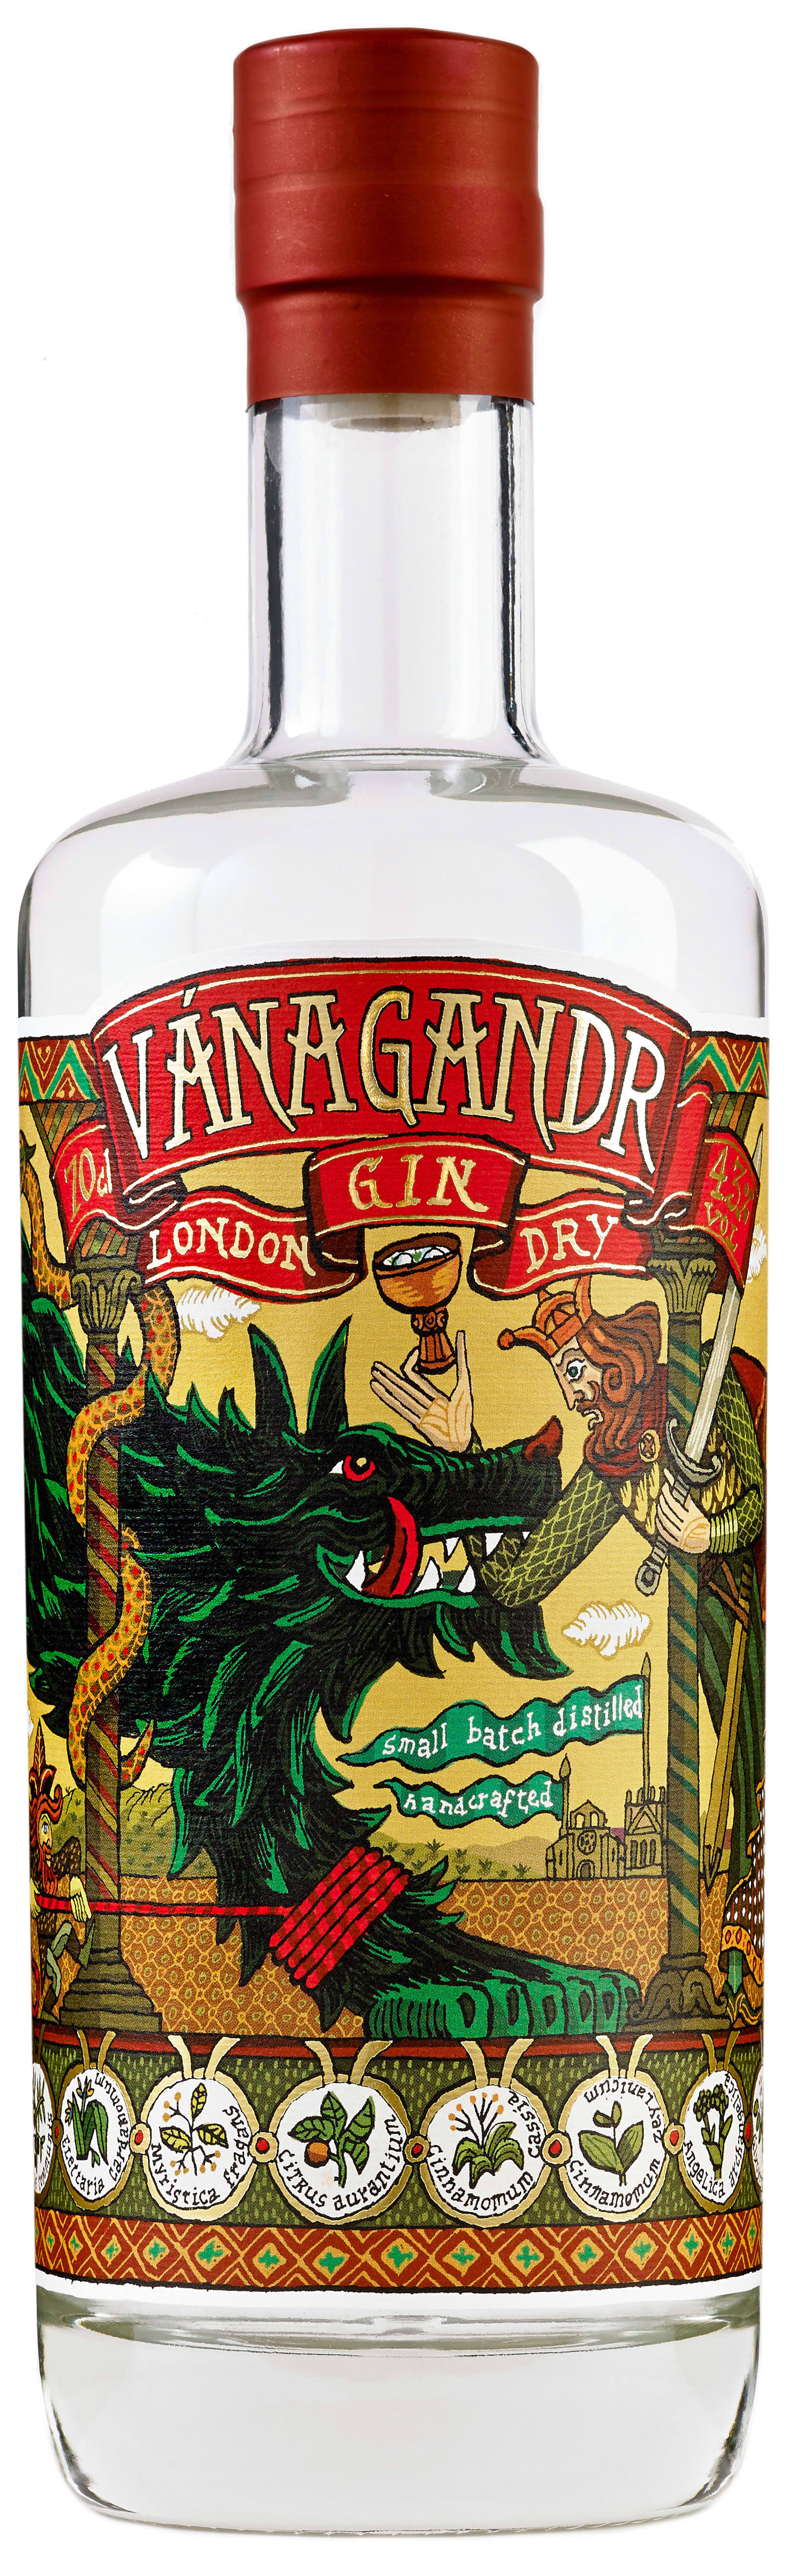 Vanagandr London Dry Gin - 750 ml